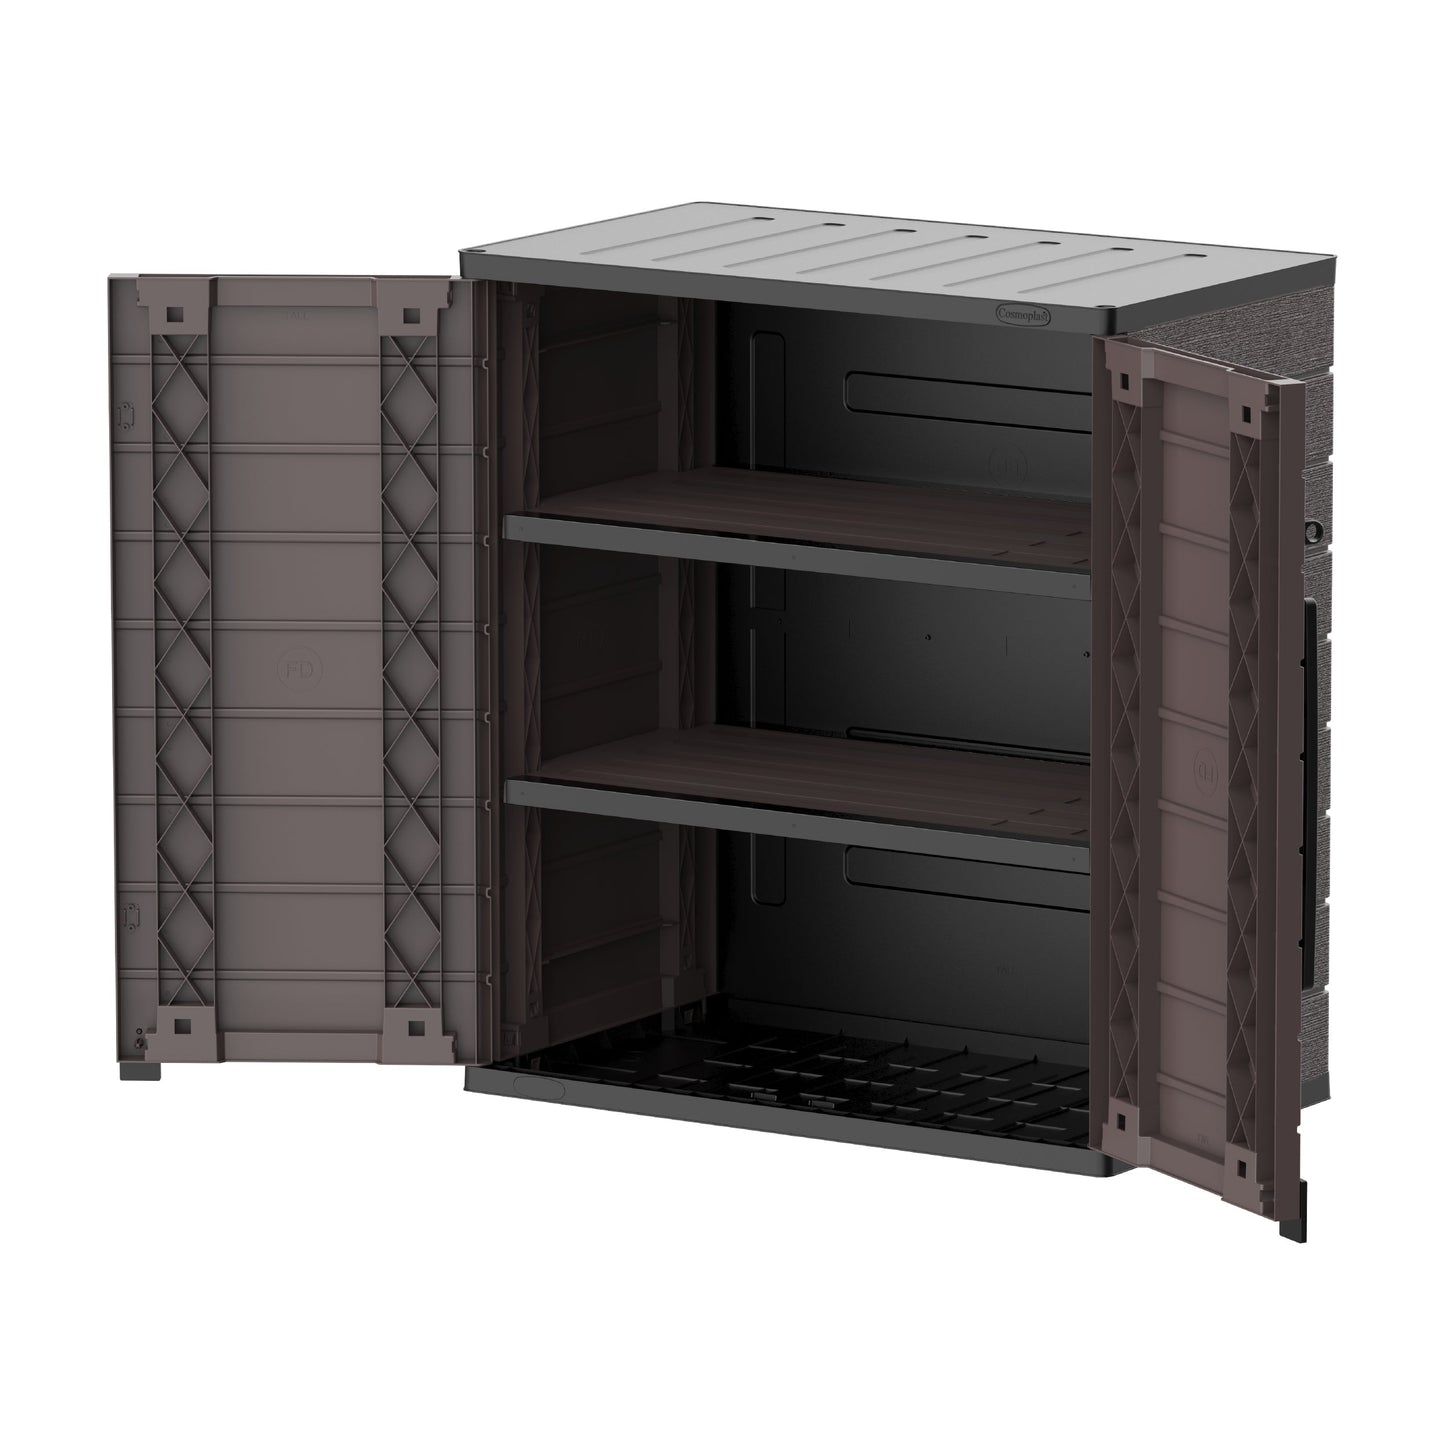 Cedargrain Vertical Storage Short Cabinet - Cosmoplast Bahrain